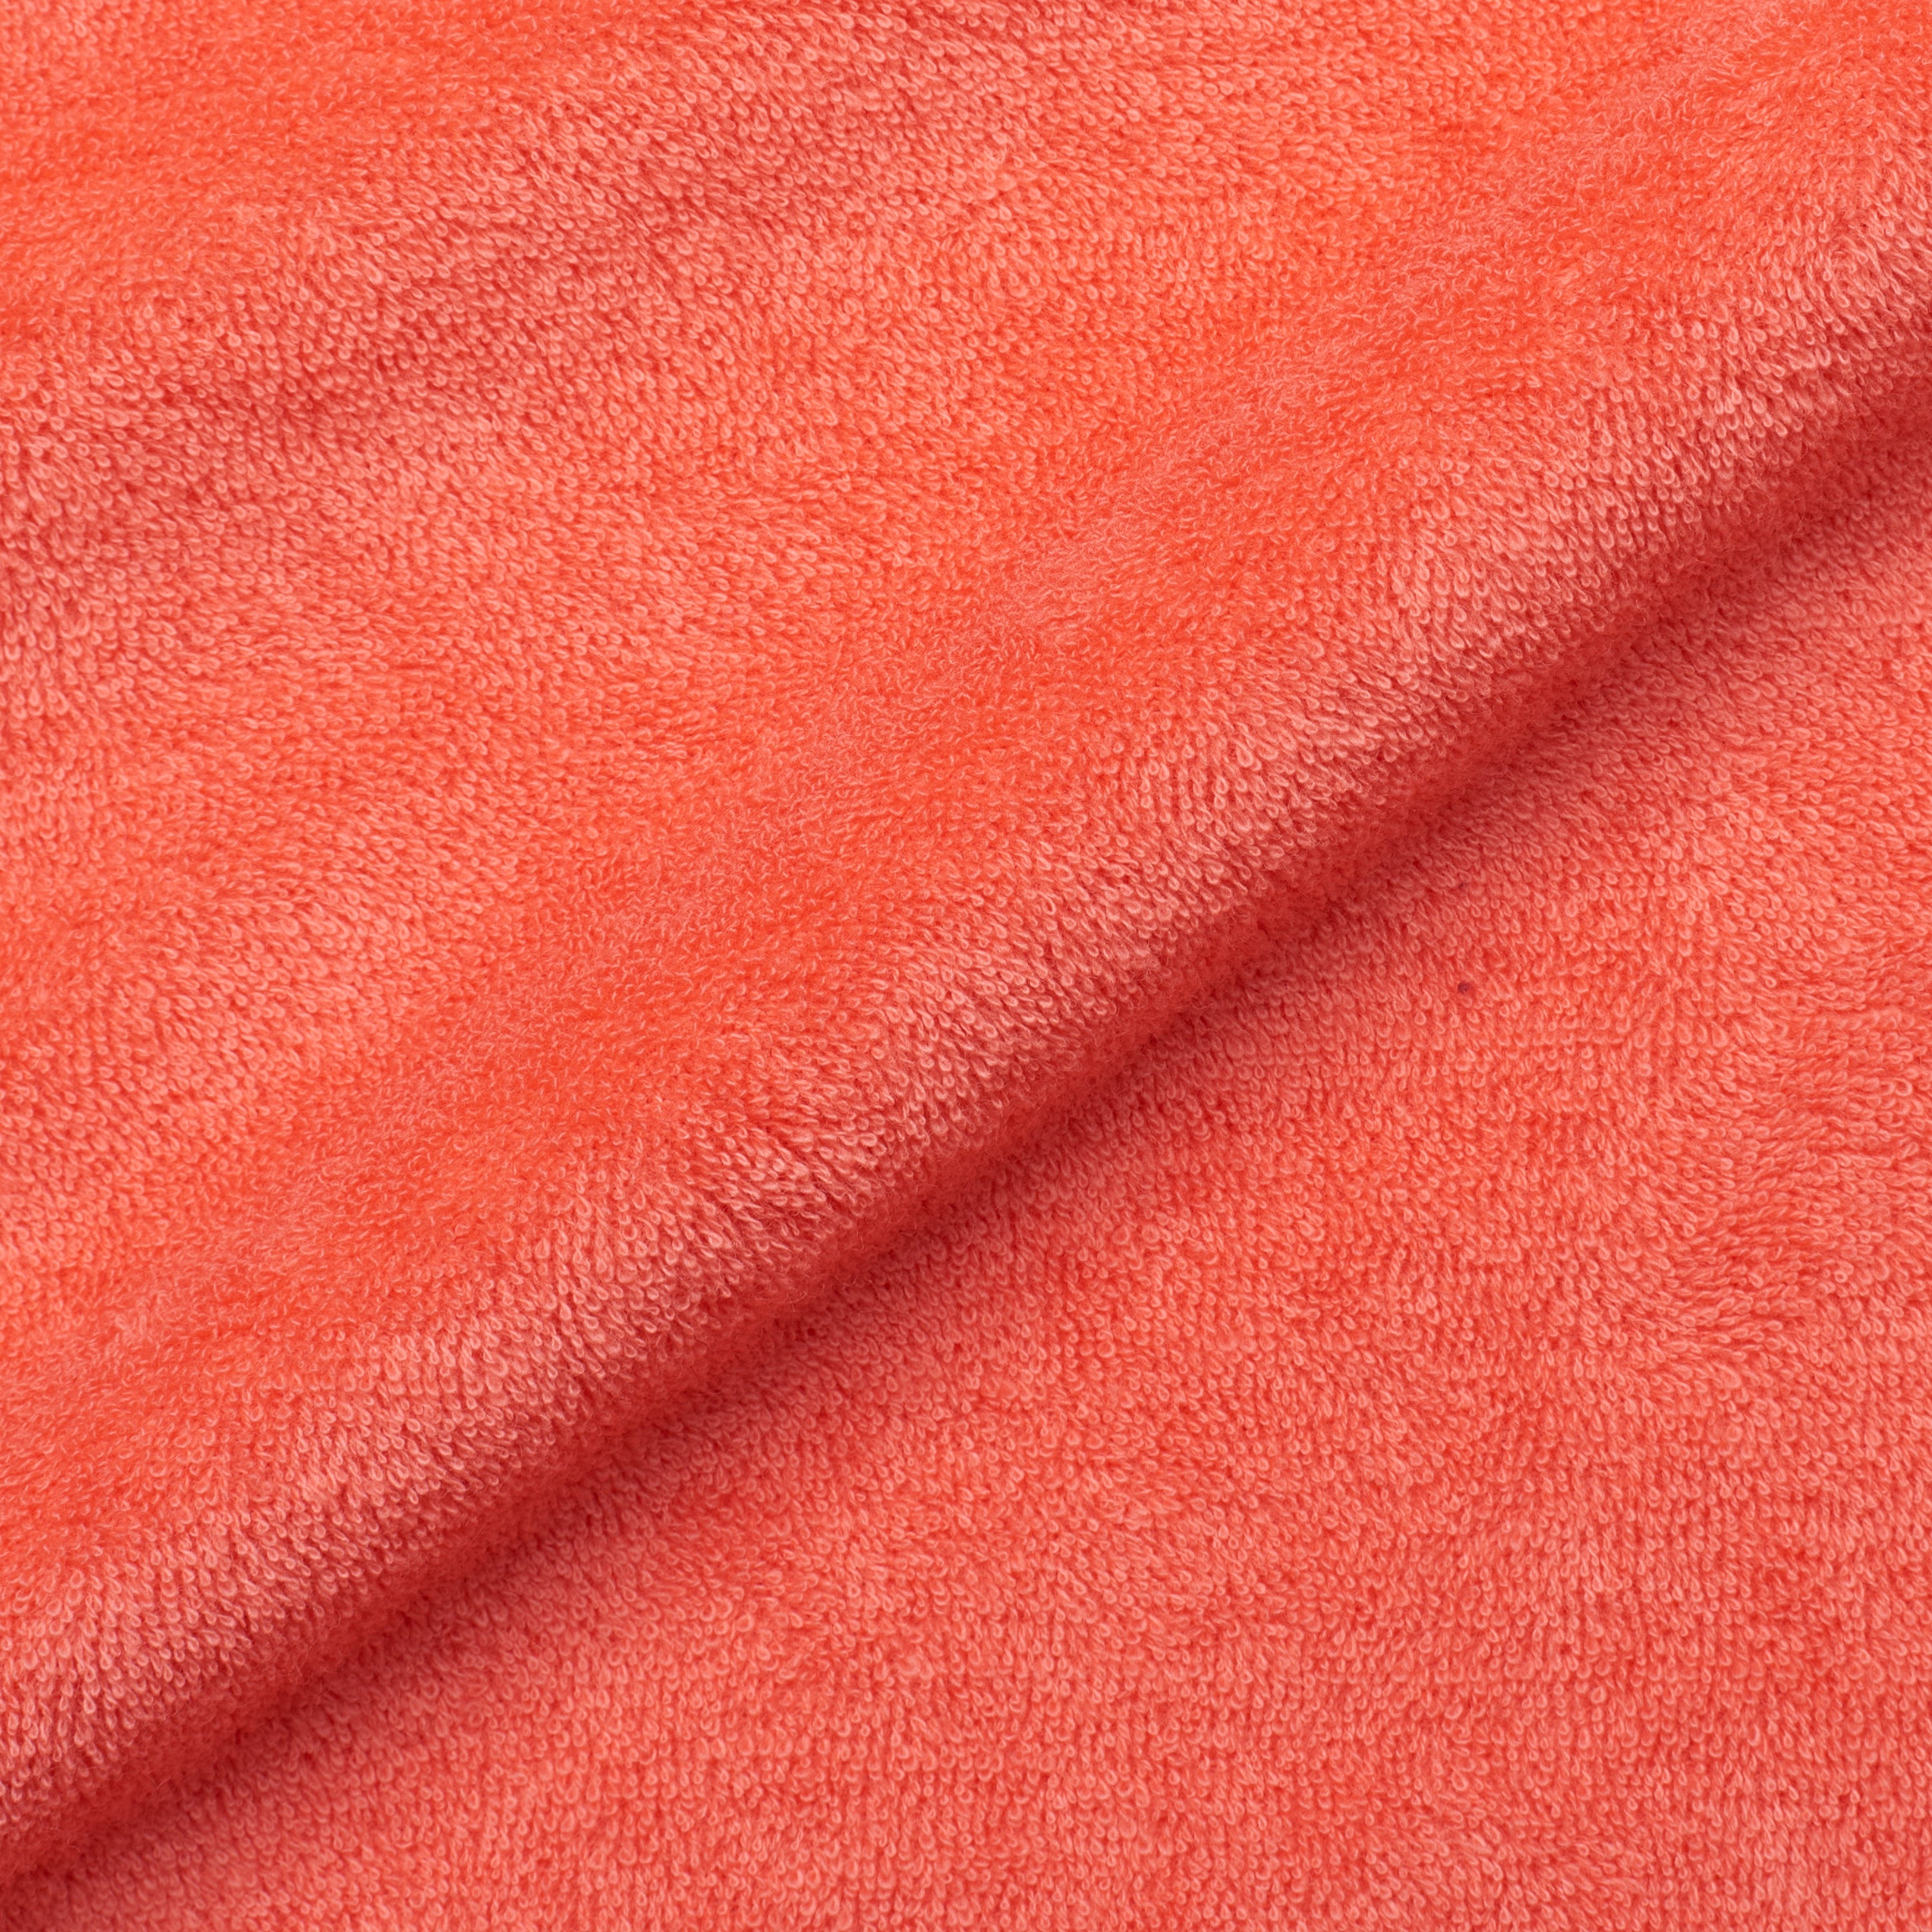 FEDELI "Mondial" Salmon Terry Cloth Short Sleeve Polo Shirt NEW Slim Fit FEDELI